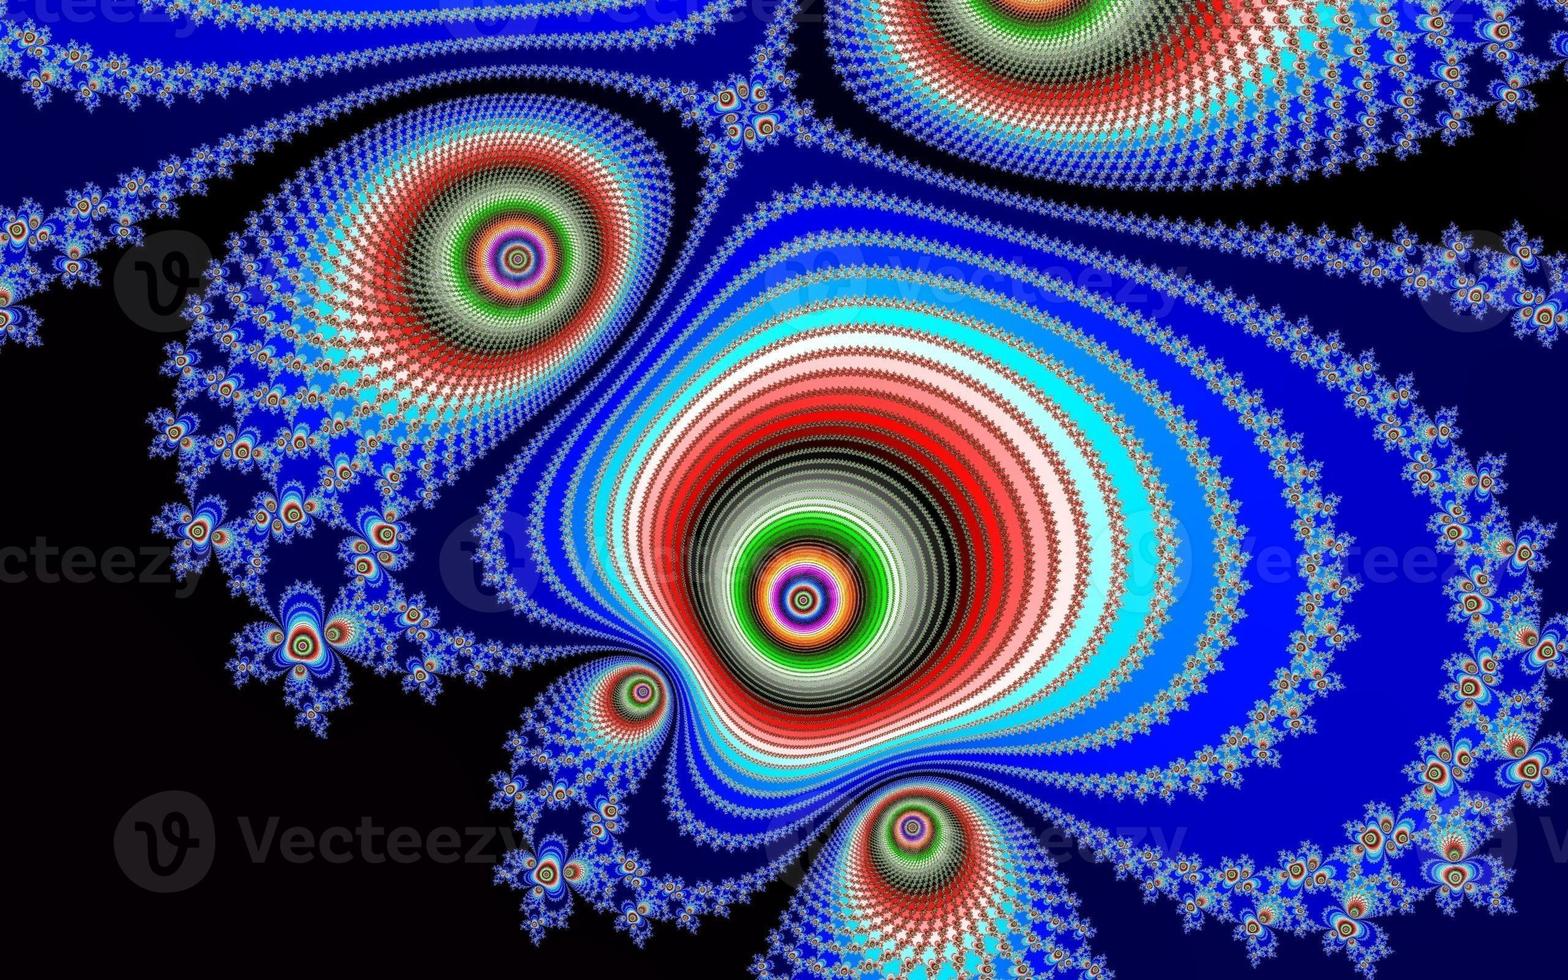 imágenes de fractales tridimensionales 12846593 Foto de stock en Vecteezy